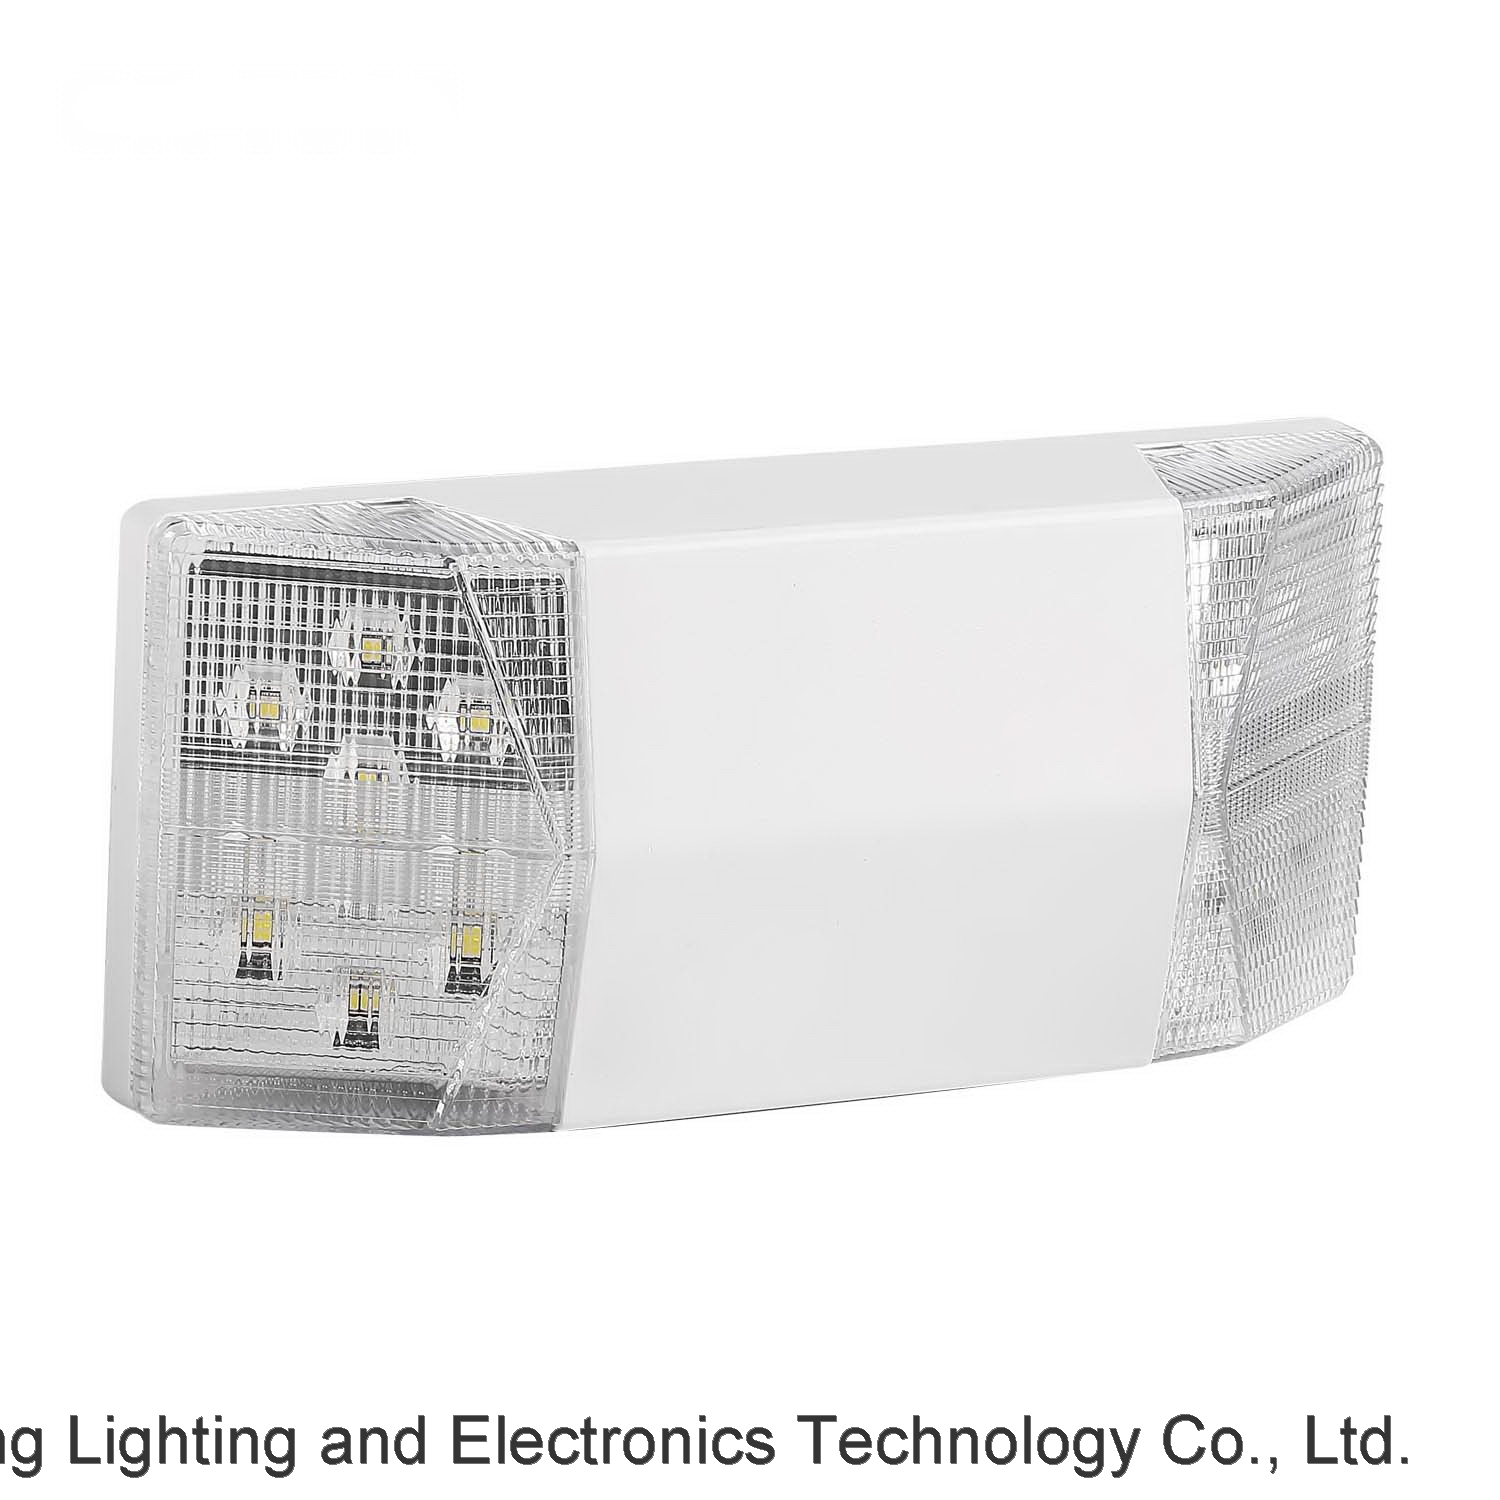 UL Listed LED Emergency Light CR-7010